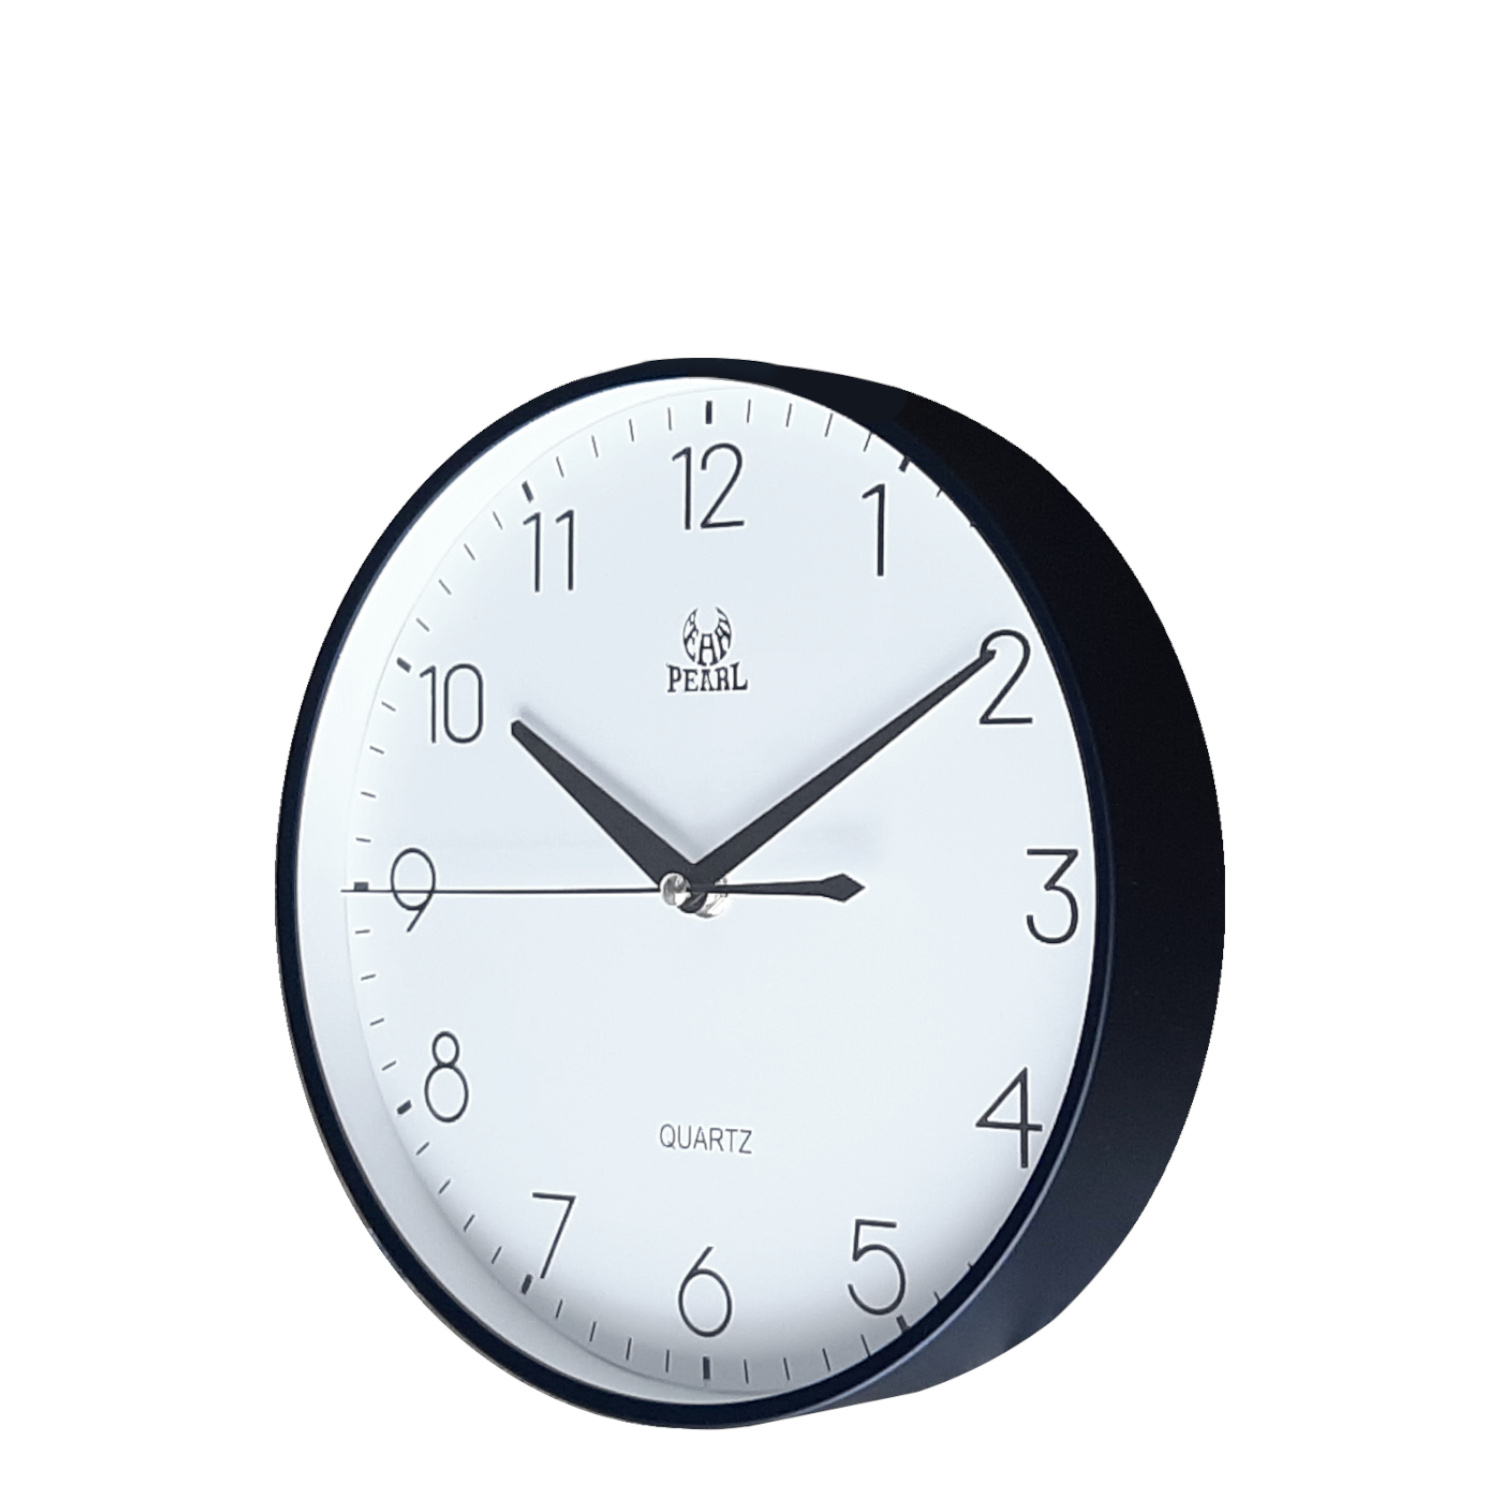 PW347-BLK 26cm Wall Clock Black